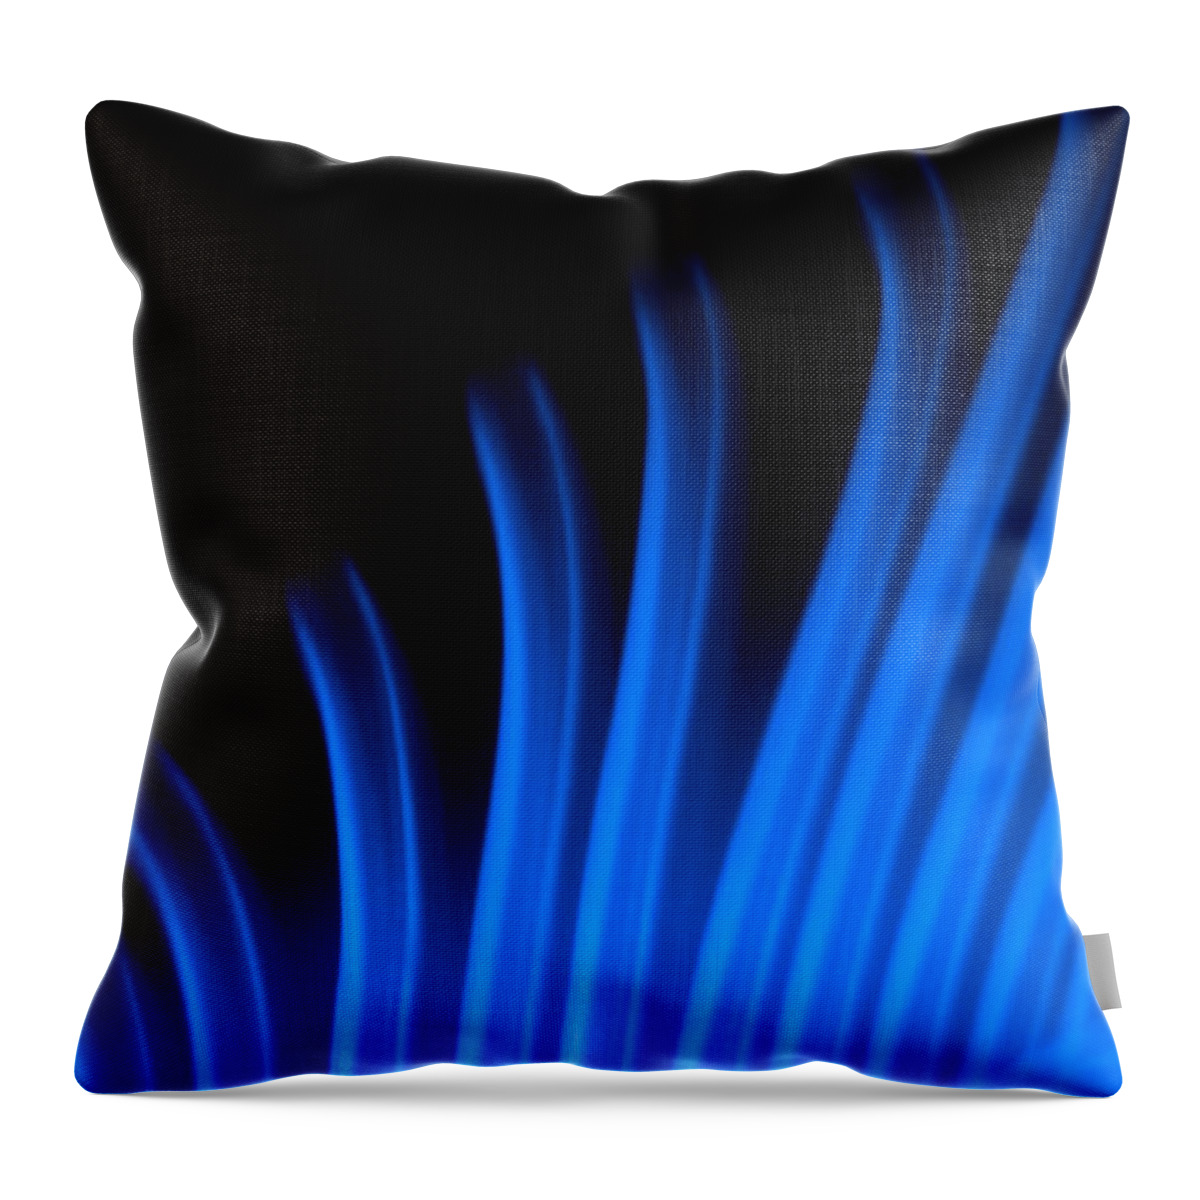 Art Throw Pillow featuring the photograph Blue Palm by Darryl Dalton